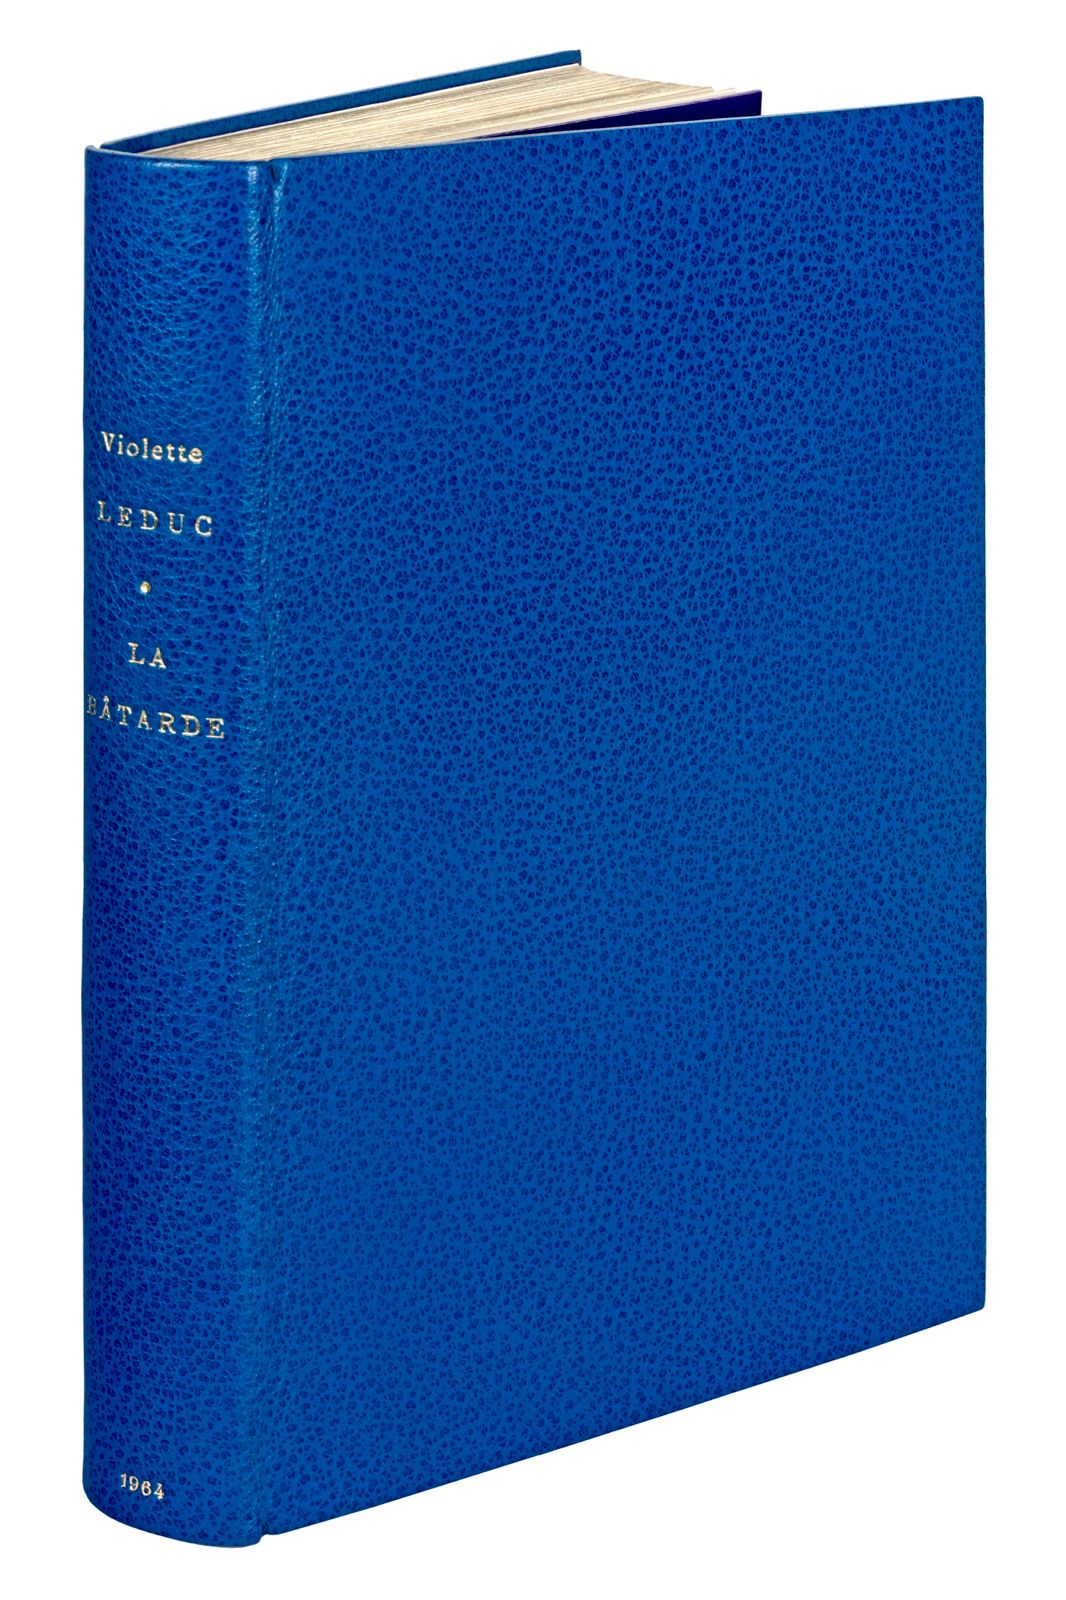 LEDUC (Violette). La Bâtarde. Paris, Gallimard, 1964. In-8, blue jansenist moroc&hellip;